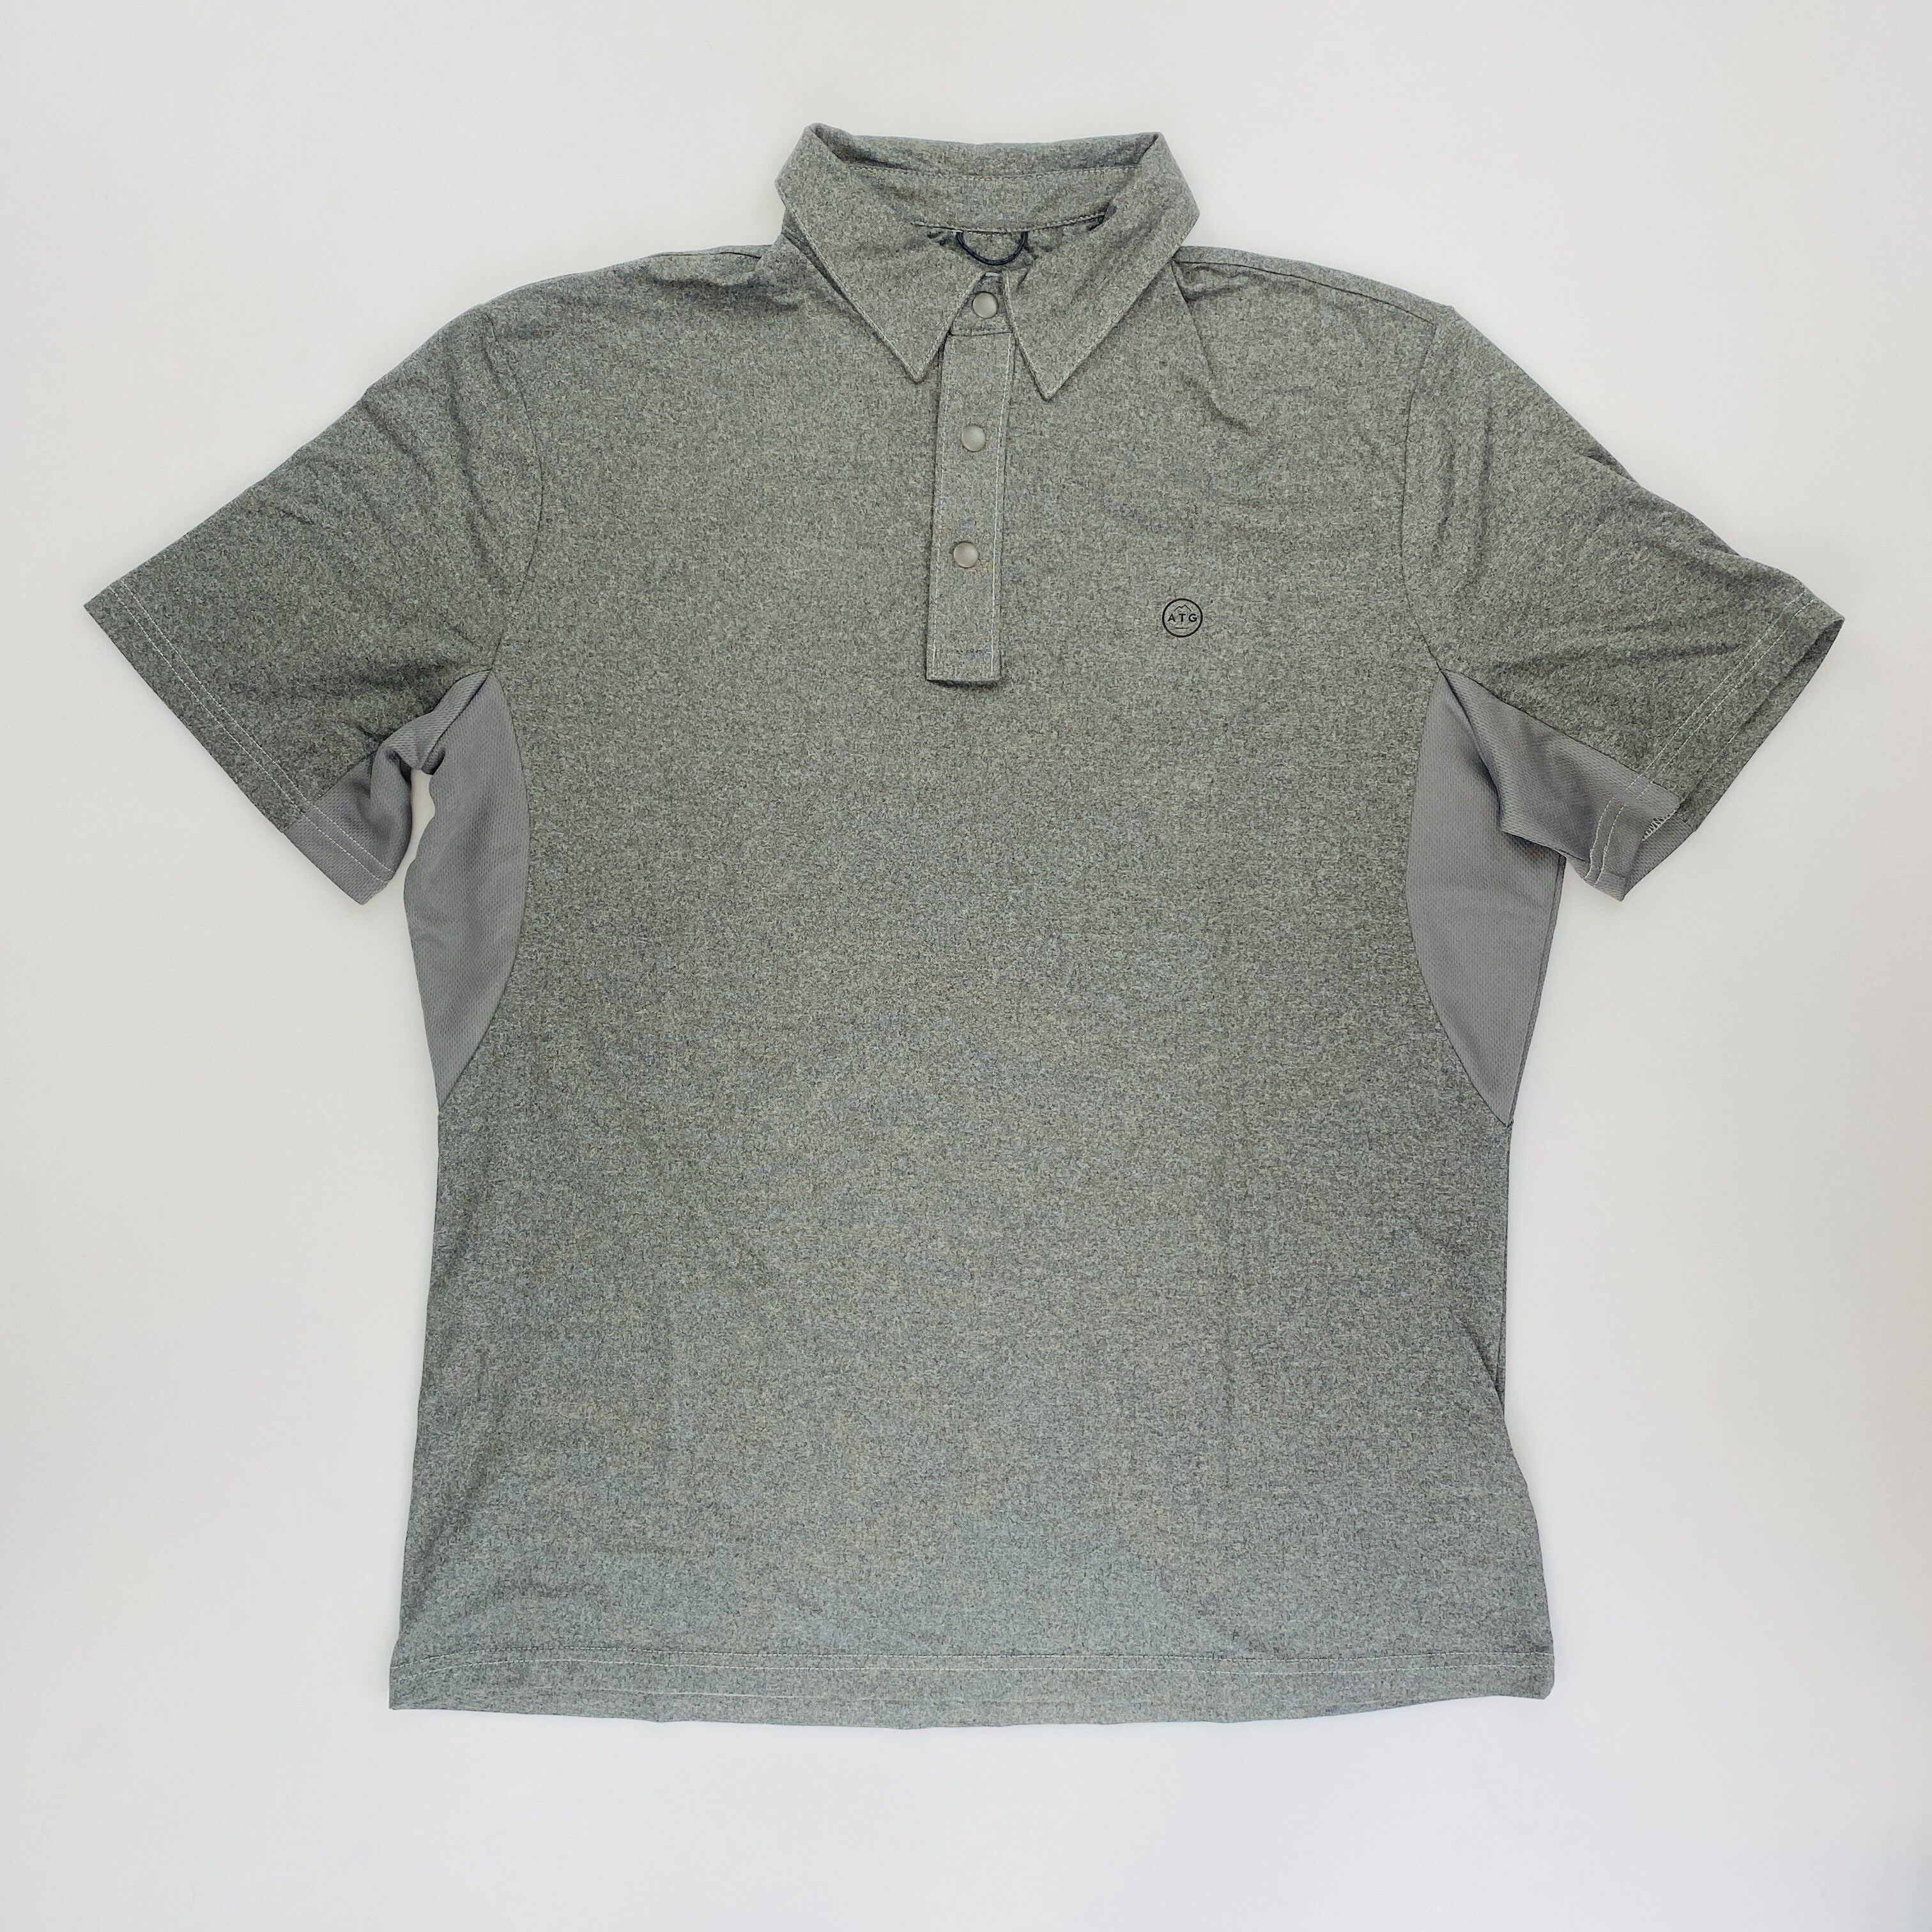 Wrangler Ss Performance Polo - Second Hand Polo shirt - Men's - Grey - M | Hardloop